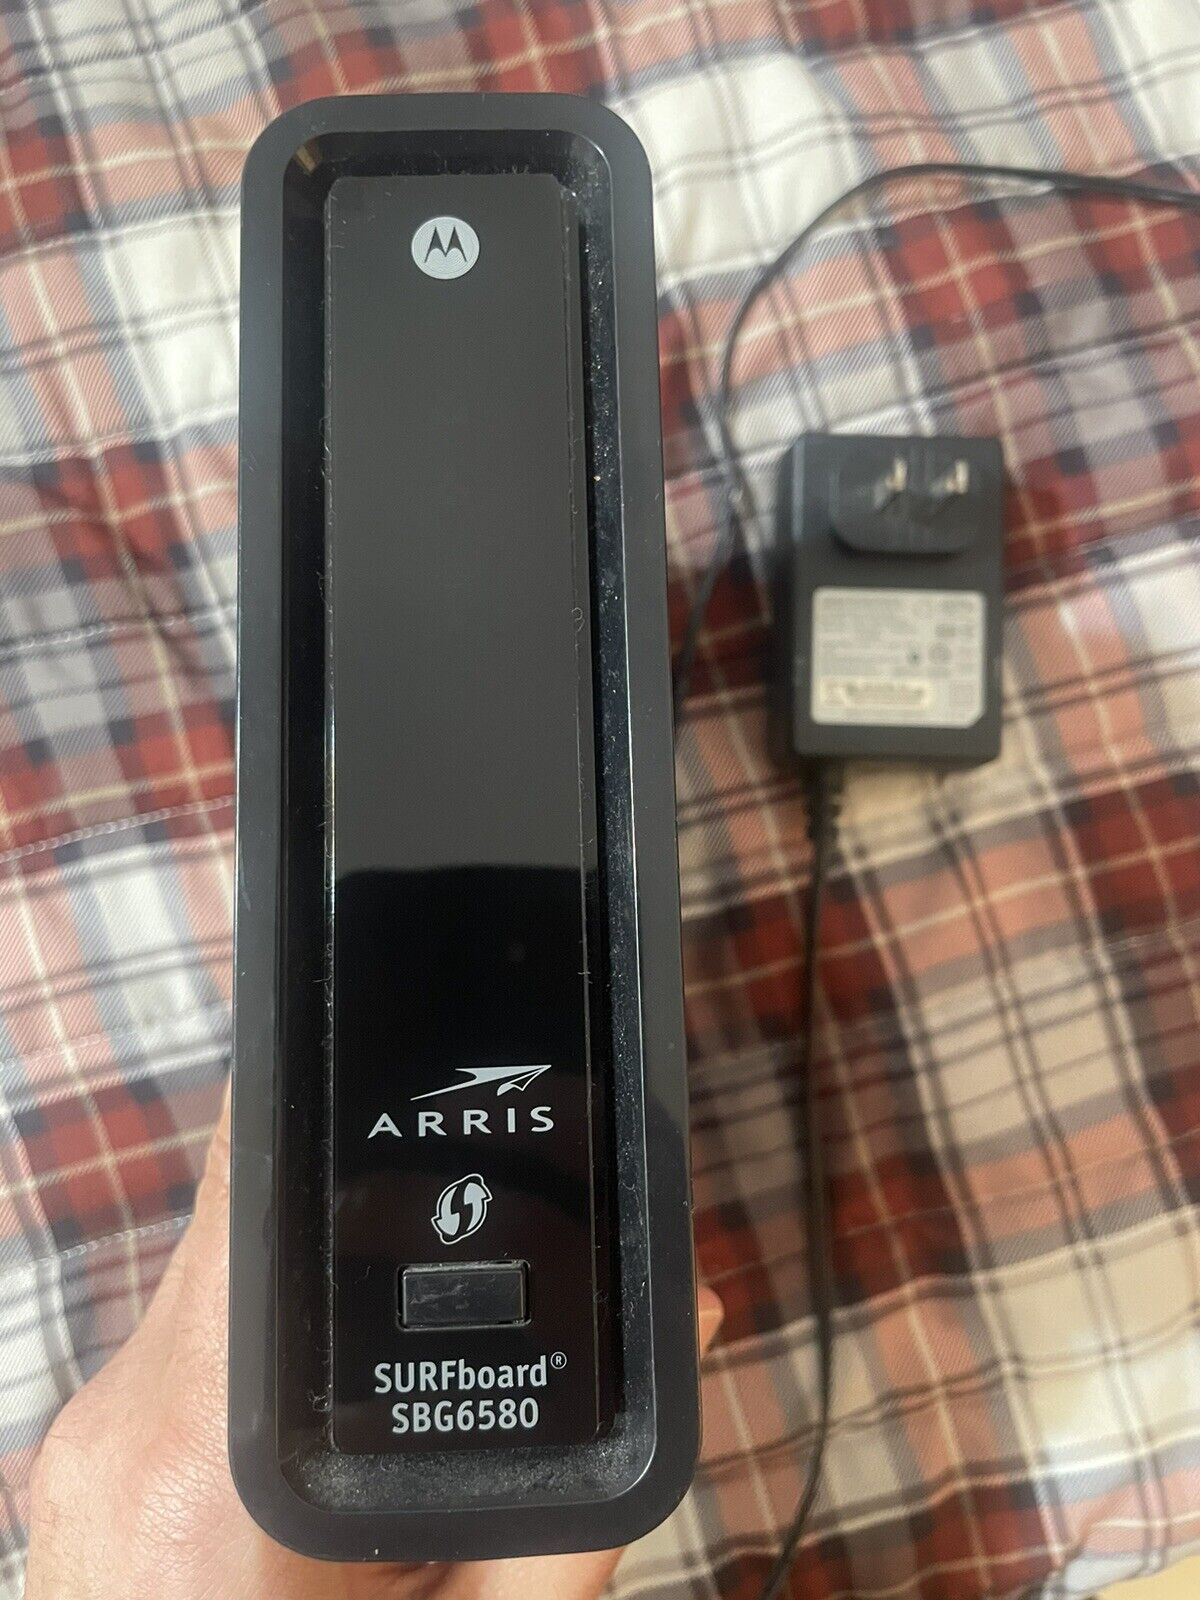 ARRIS Motorola Surfboard SBG6580-G228 WiFi Router Black - Tested - 